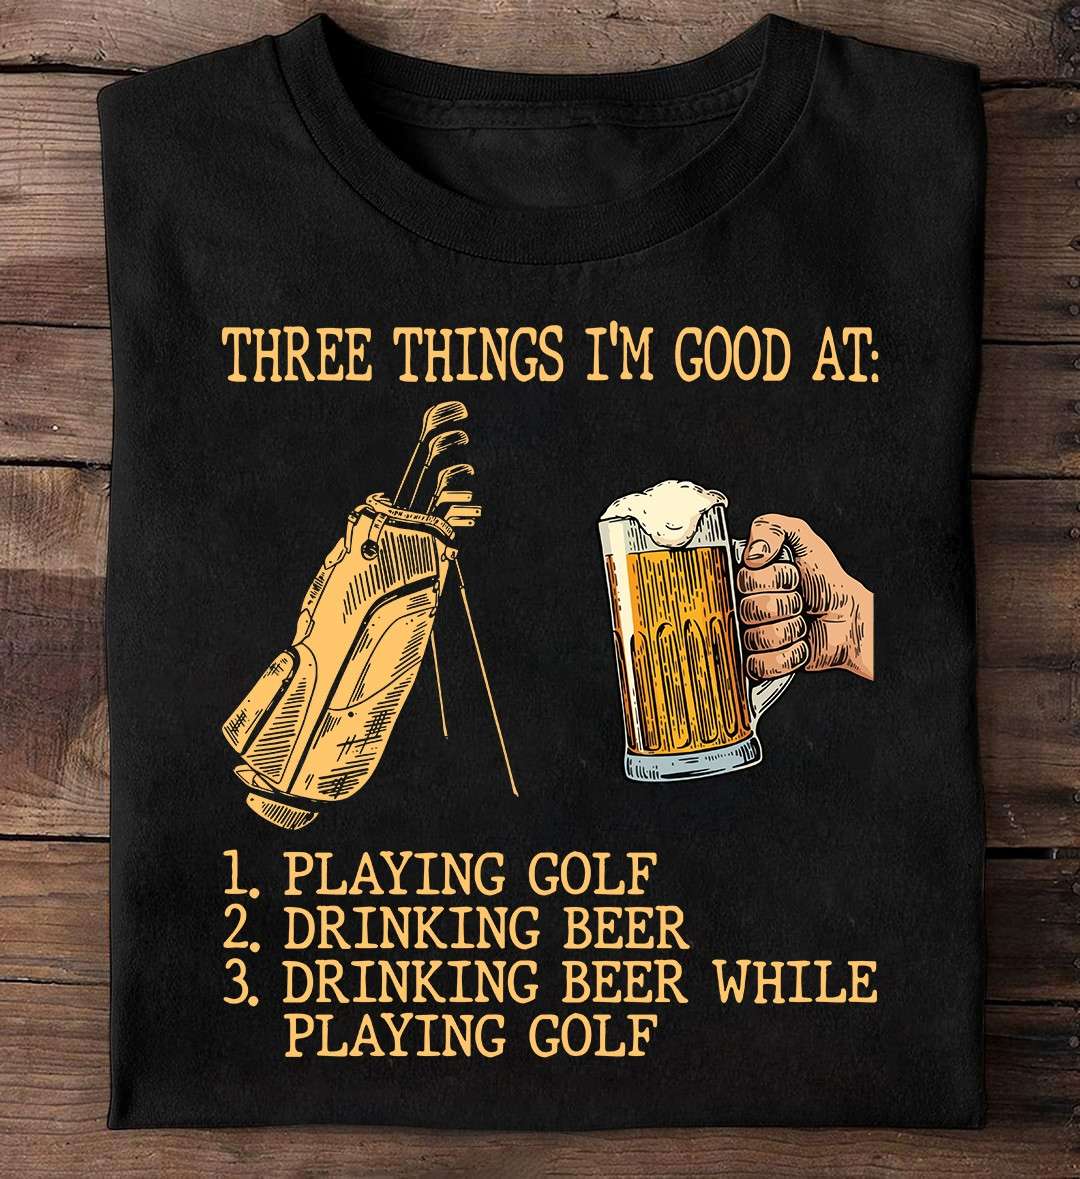 Three things i'm good at - Playing golf, Drinking Beer, Drinking Beer While Playing Golf